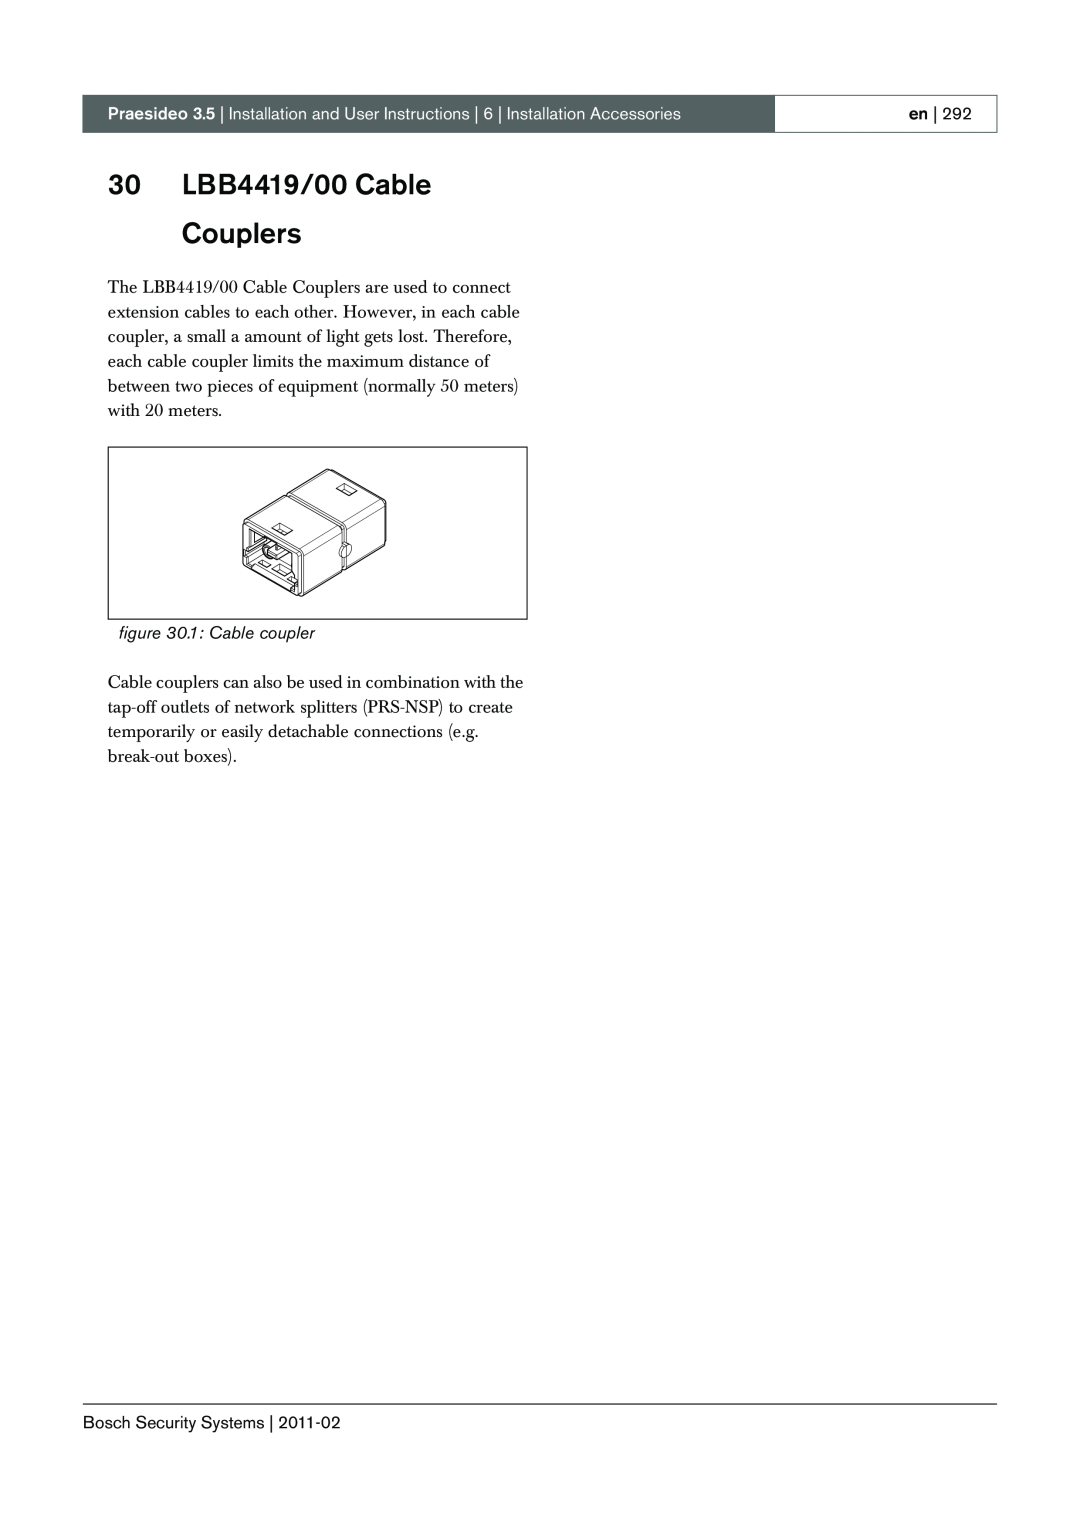 Bosch Appliances 3.5 manual 30LBB4419/00 Cable Couplers, 1: Cable coupler 